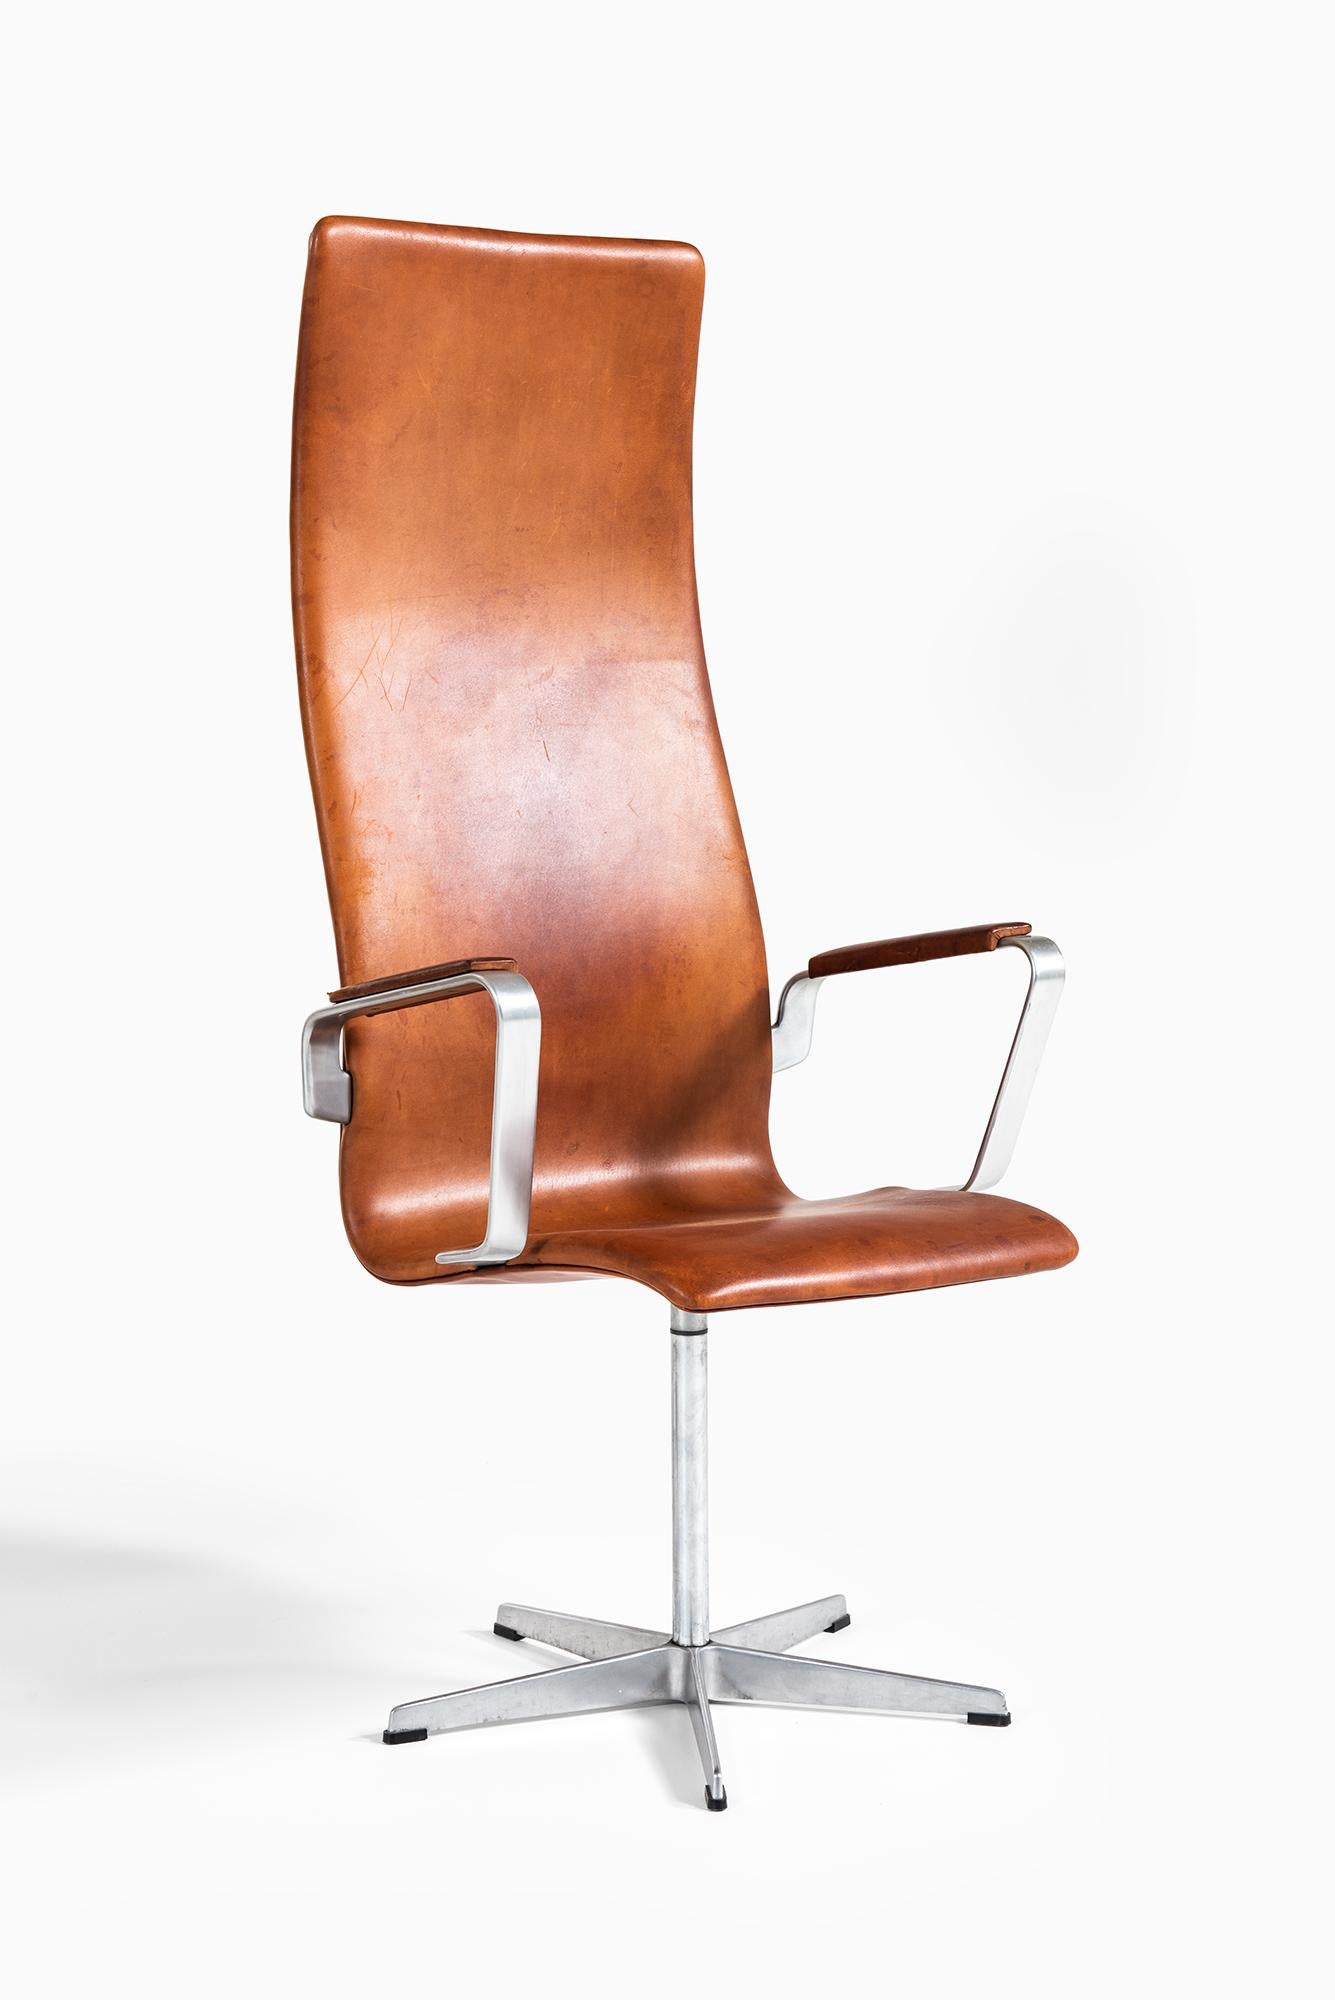 Arne Jacobsen Oxford Chairs Model 3272 by Fritz Hansen in Denmark In Excellent Condition For Sale In Limhamn, Skåne län